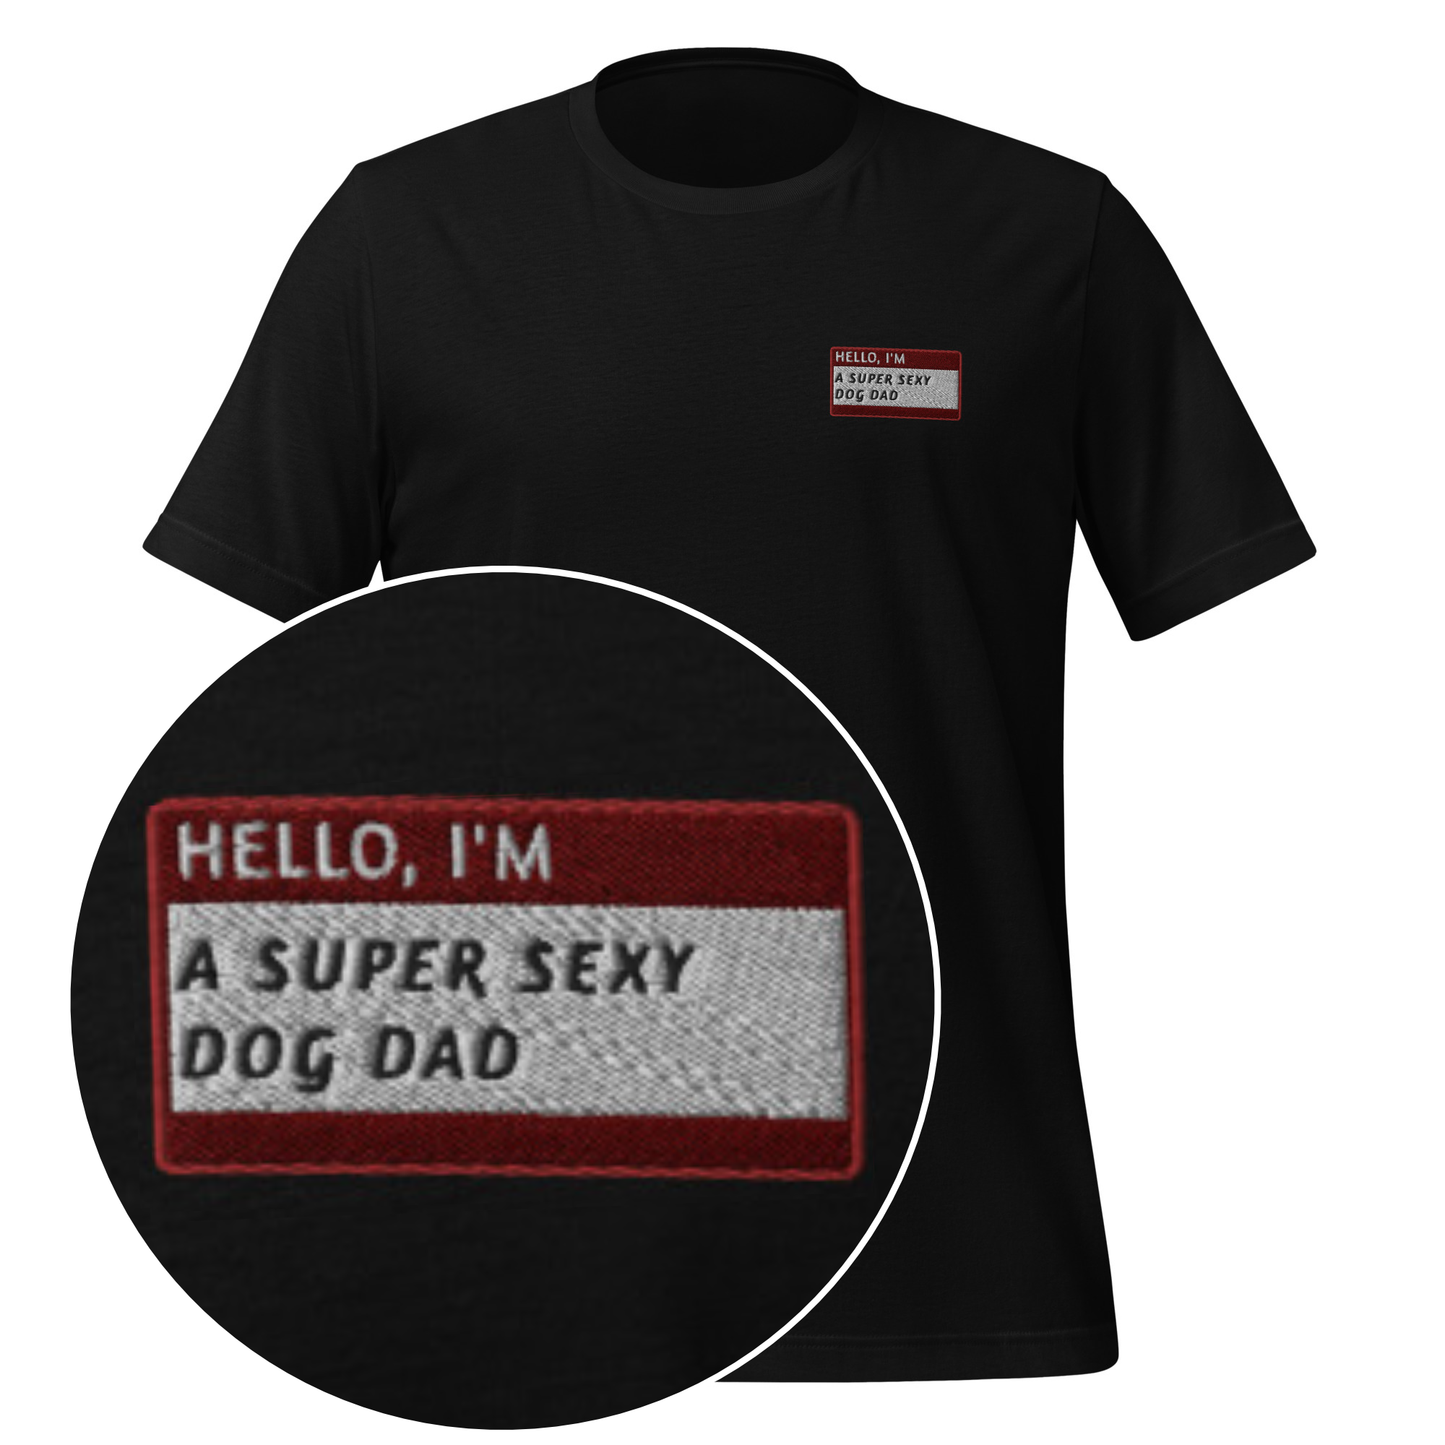 HELLO I'M A SUPER SEXY DOG DAD - Name Tag T-Shirt